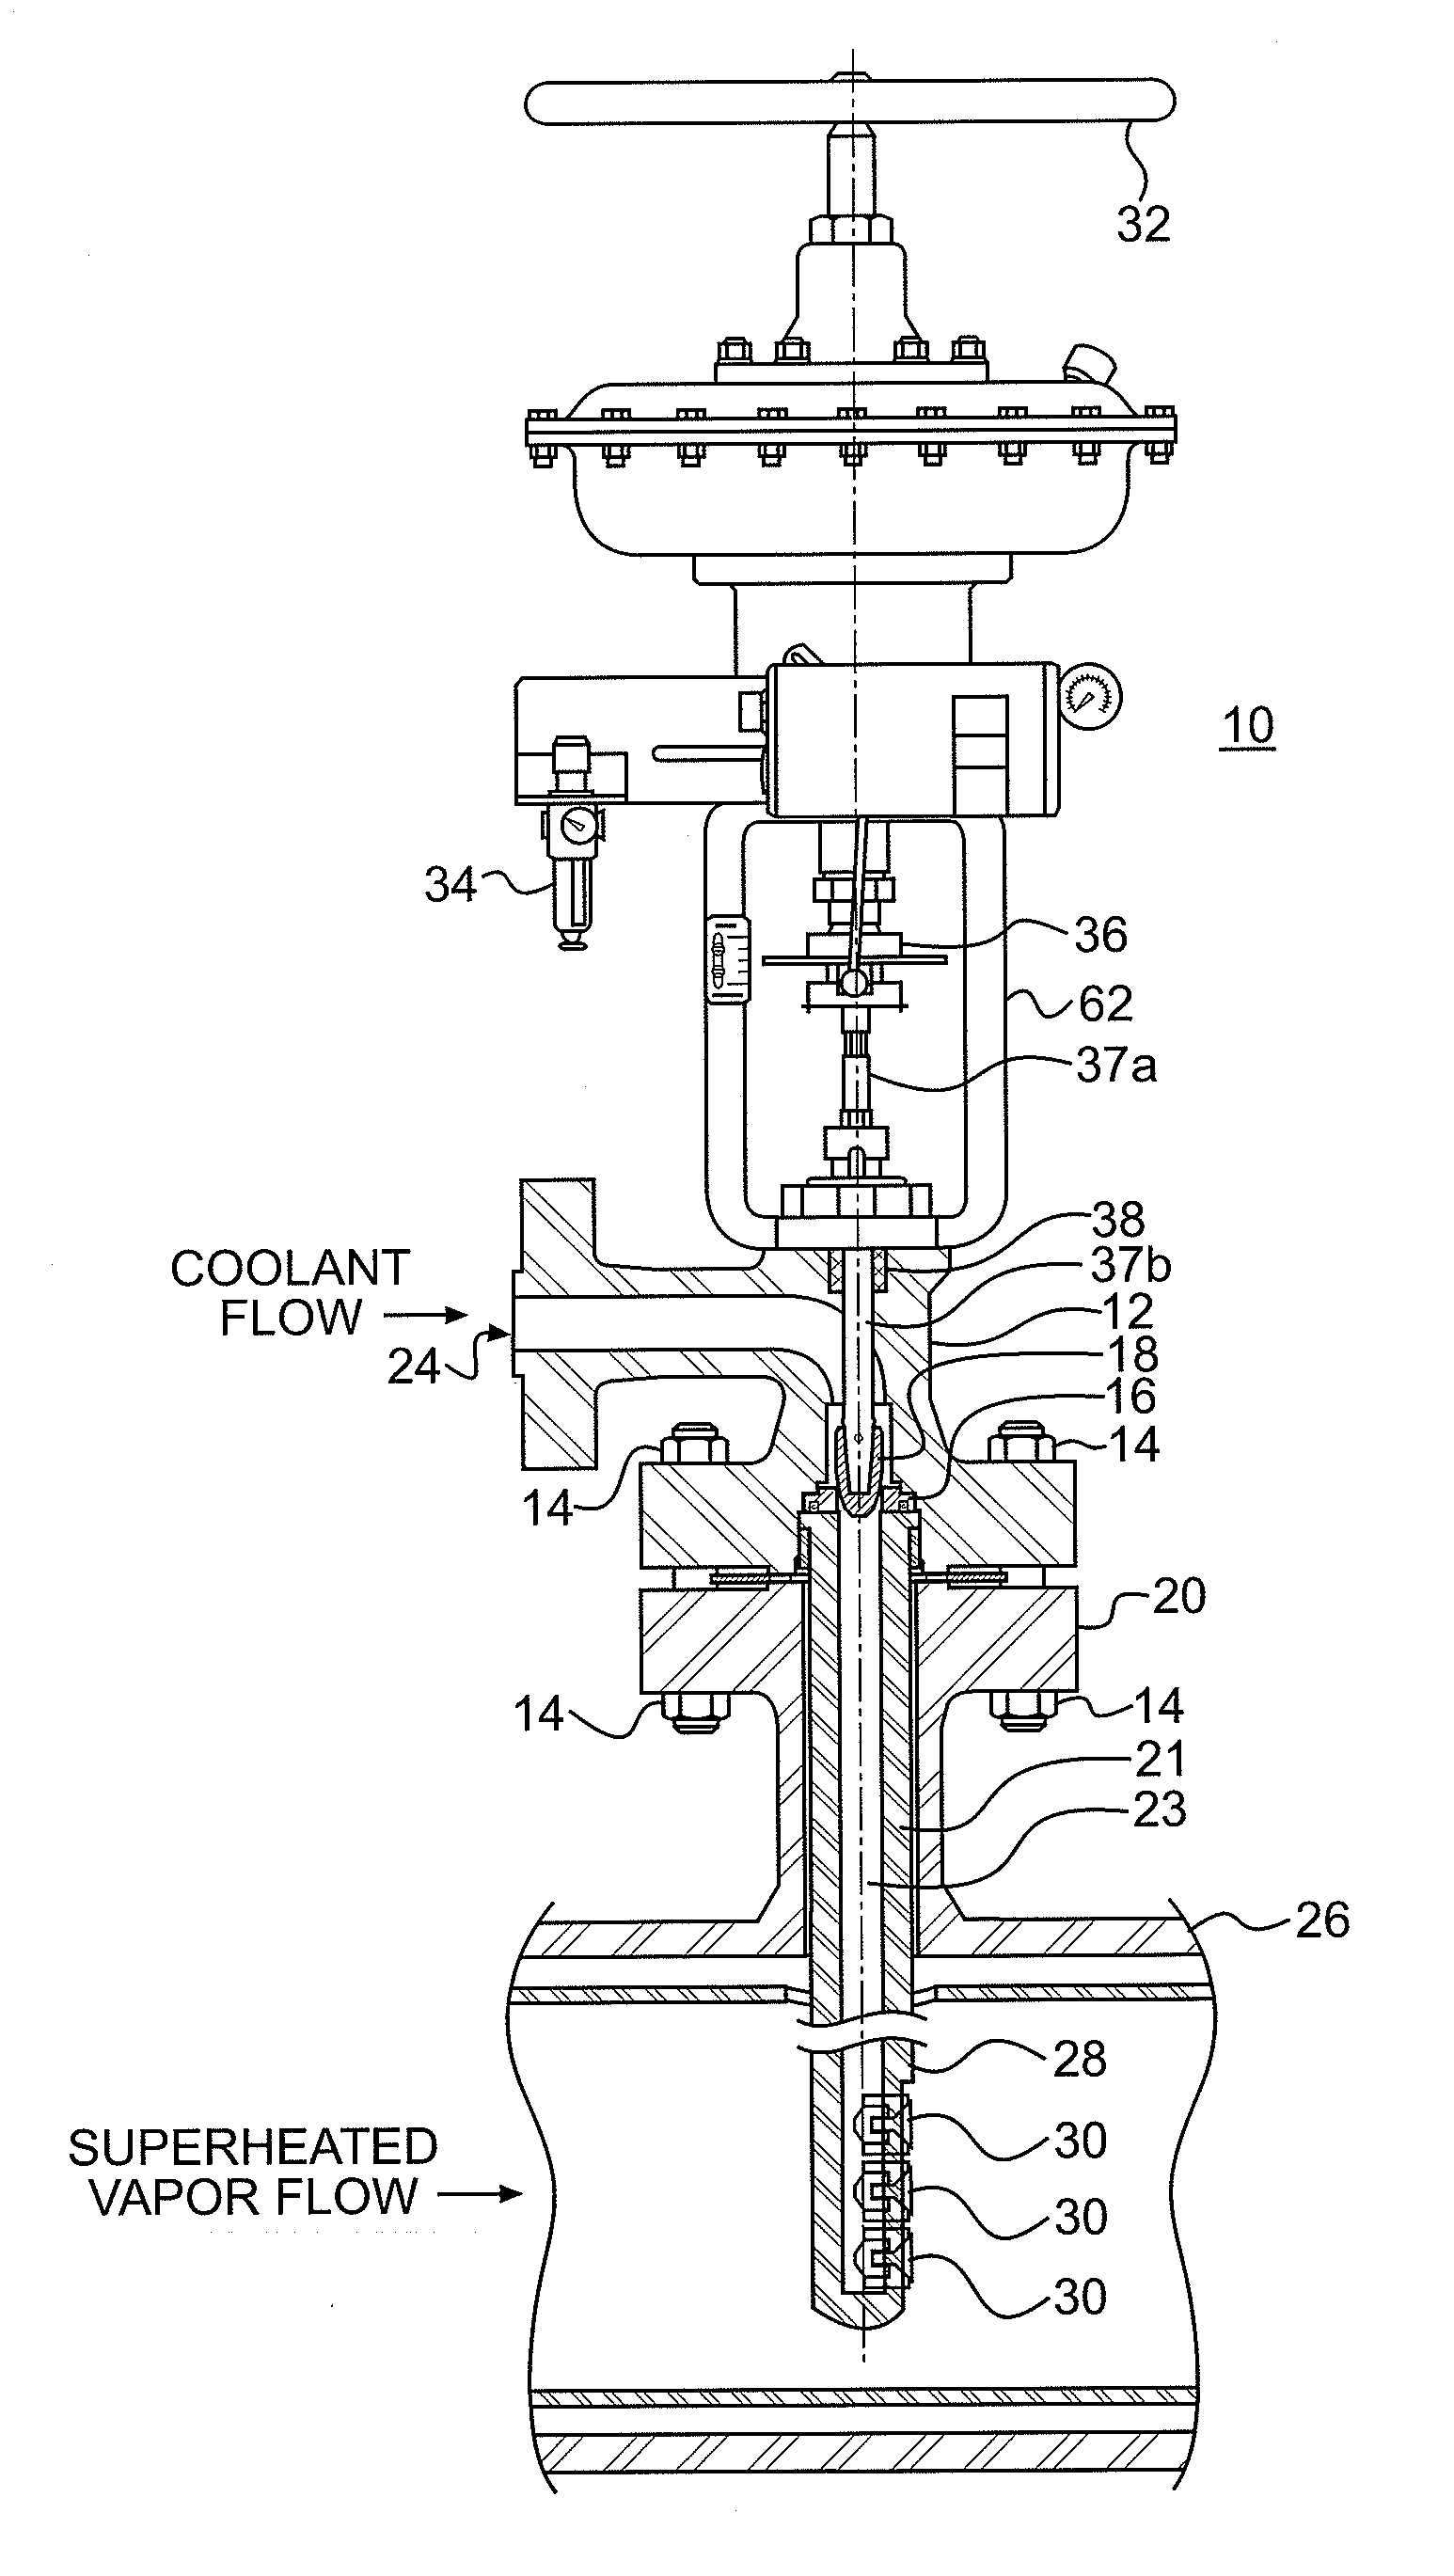 Atomizing desuperheater shutoff apparatus and method